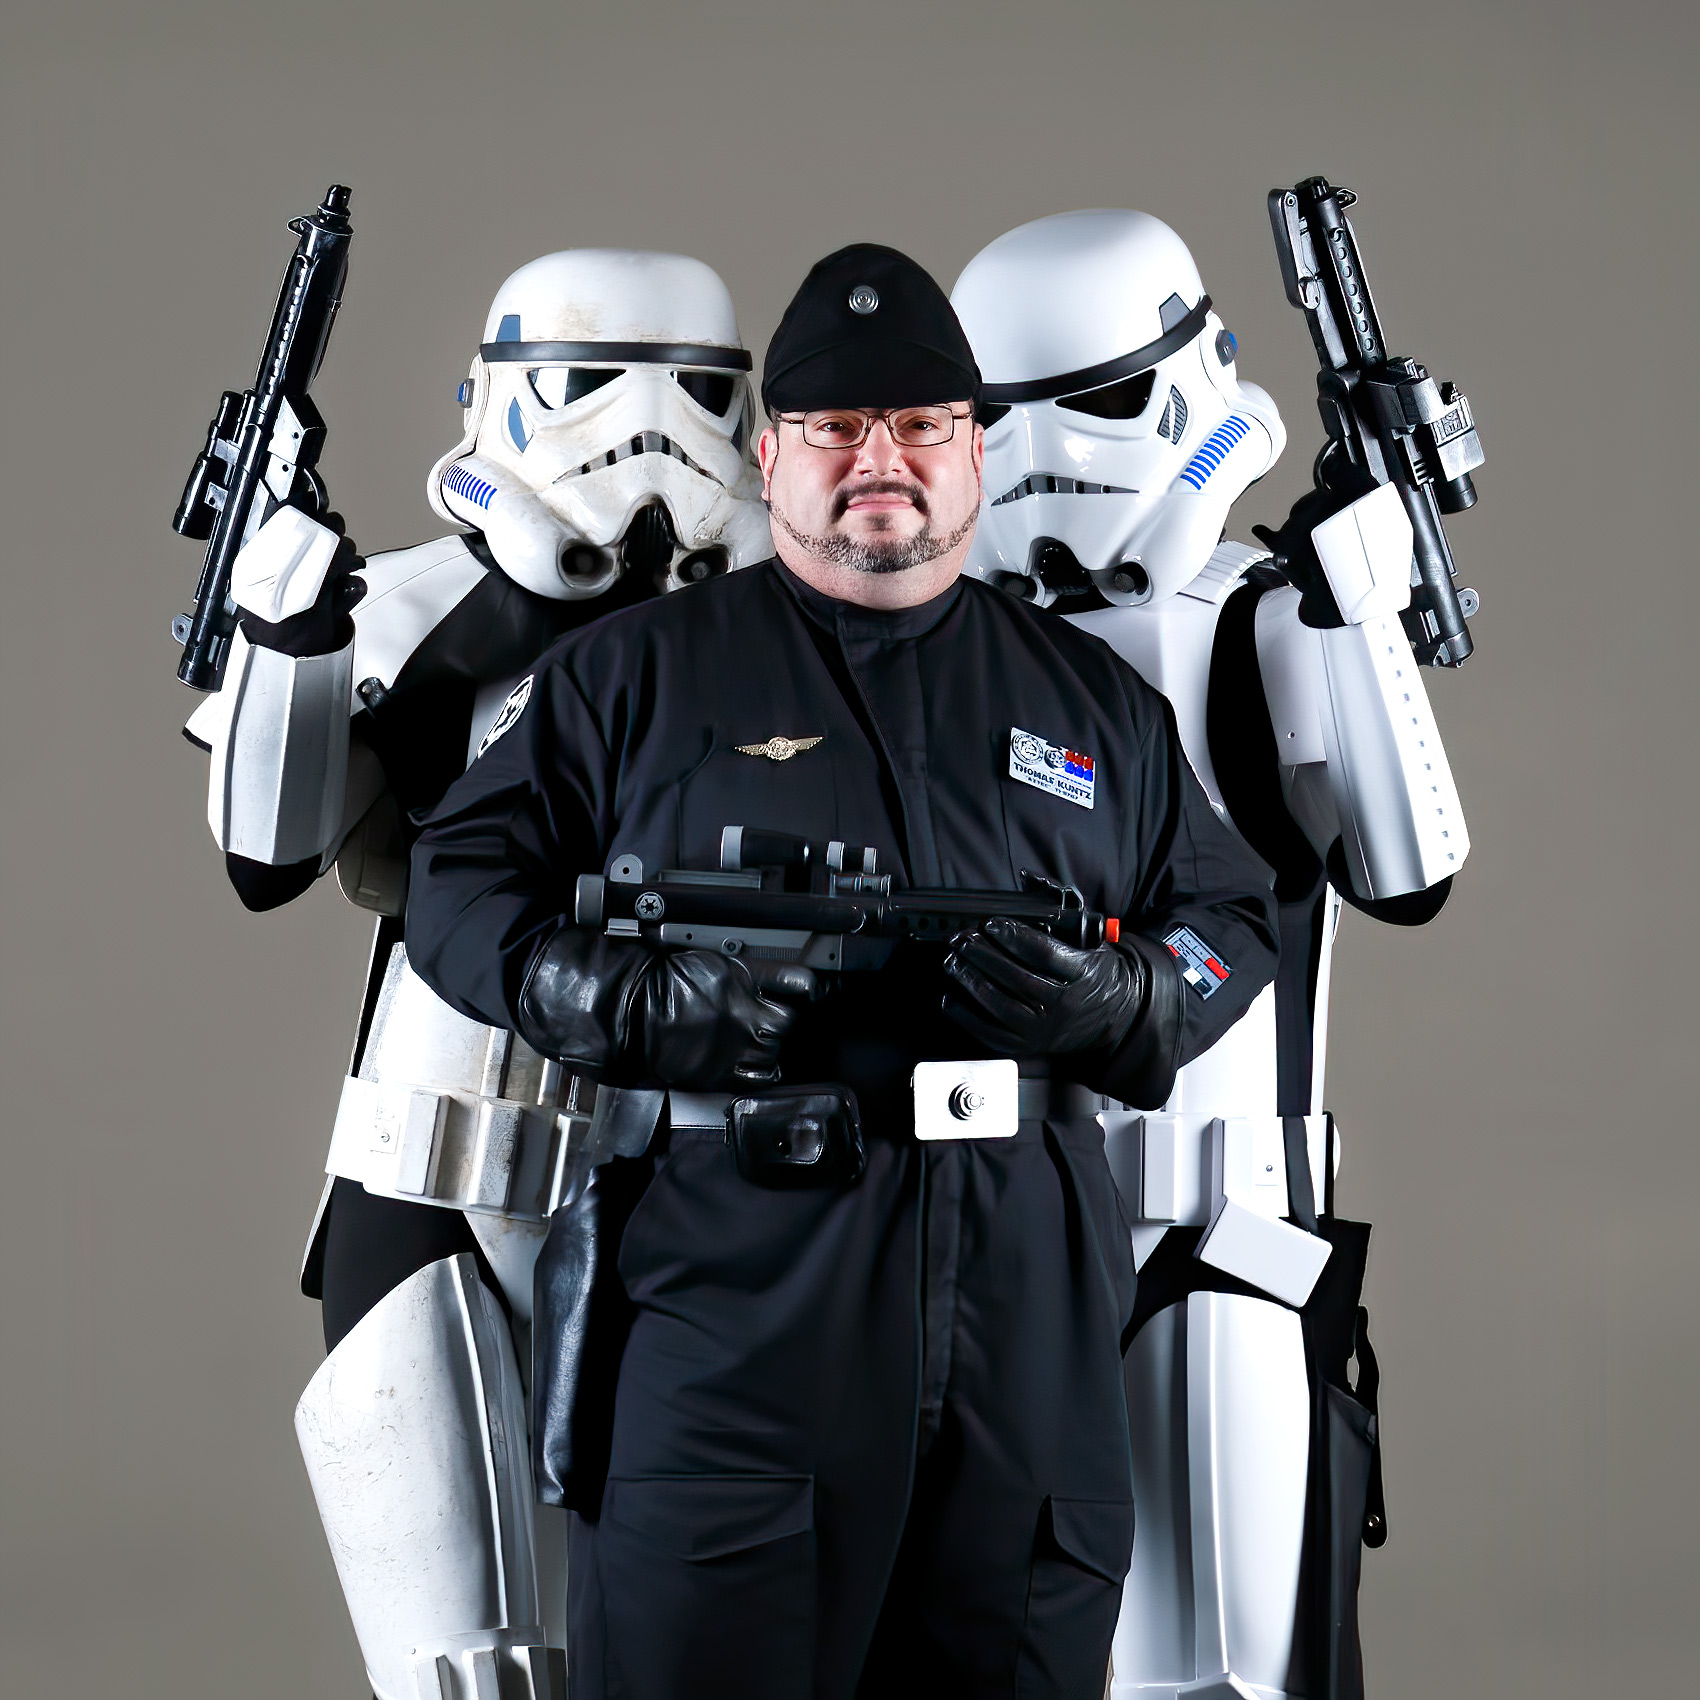 Hasbro Star Wars Black Image & Photo (Free Trial) | Bigstock